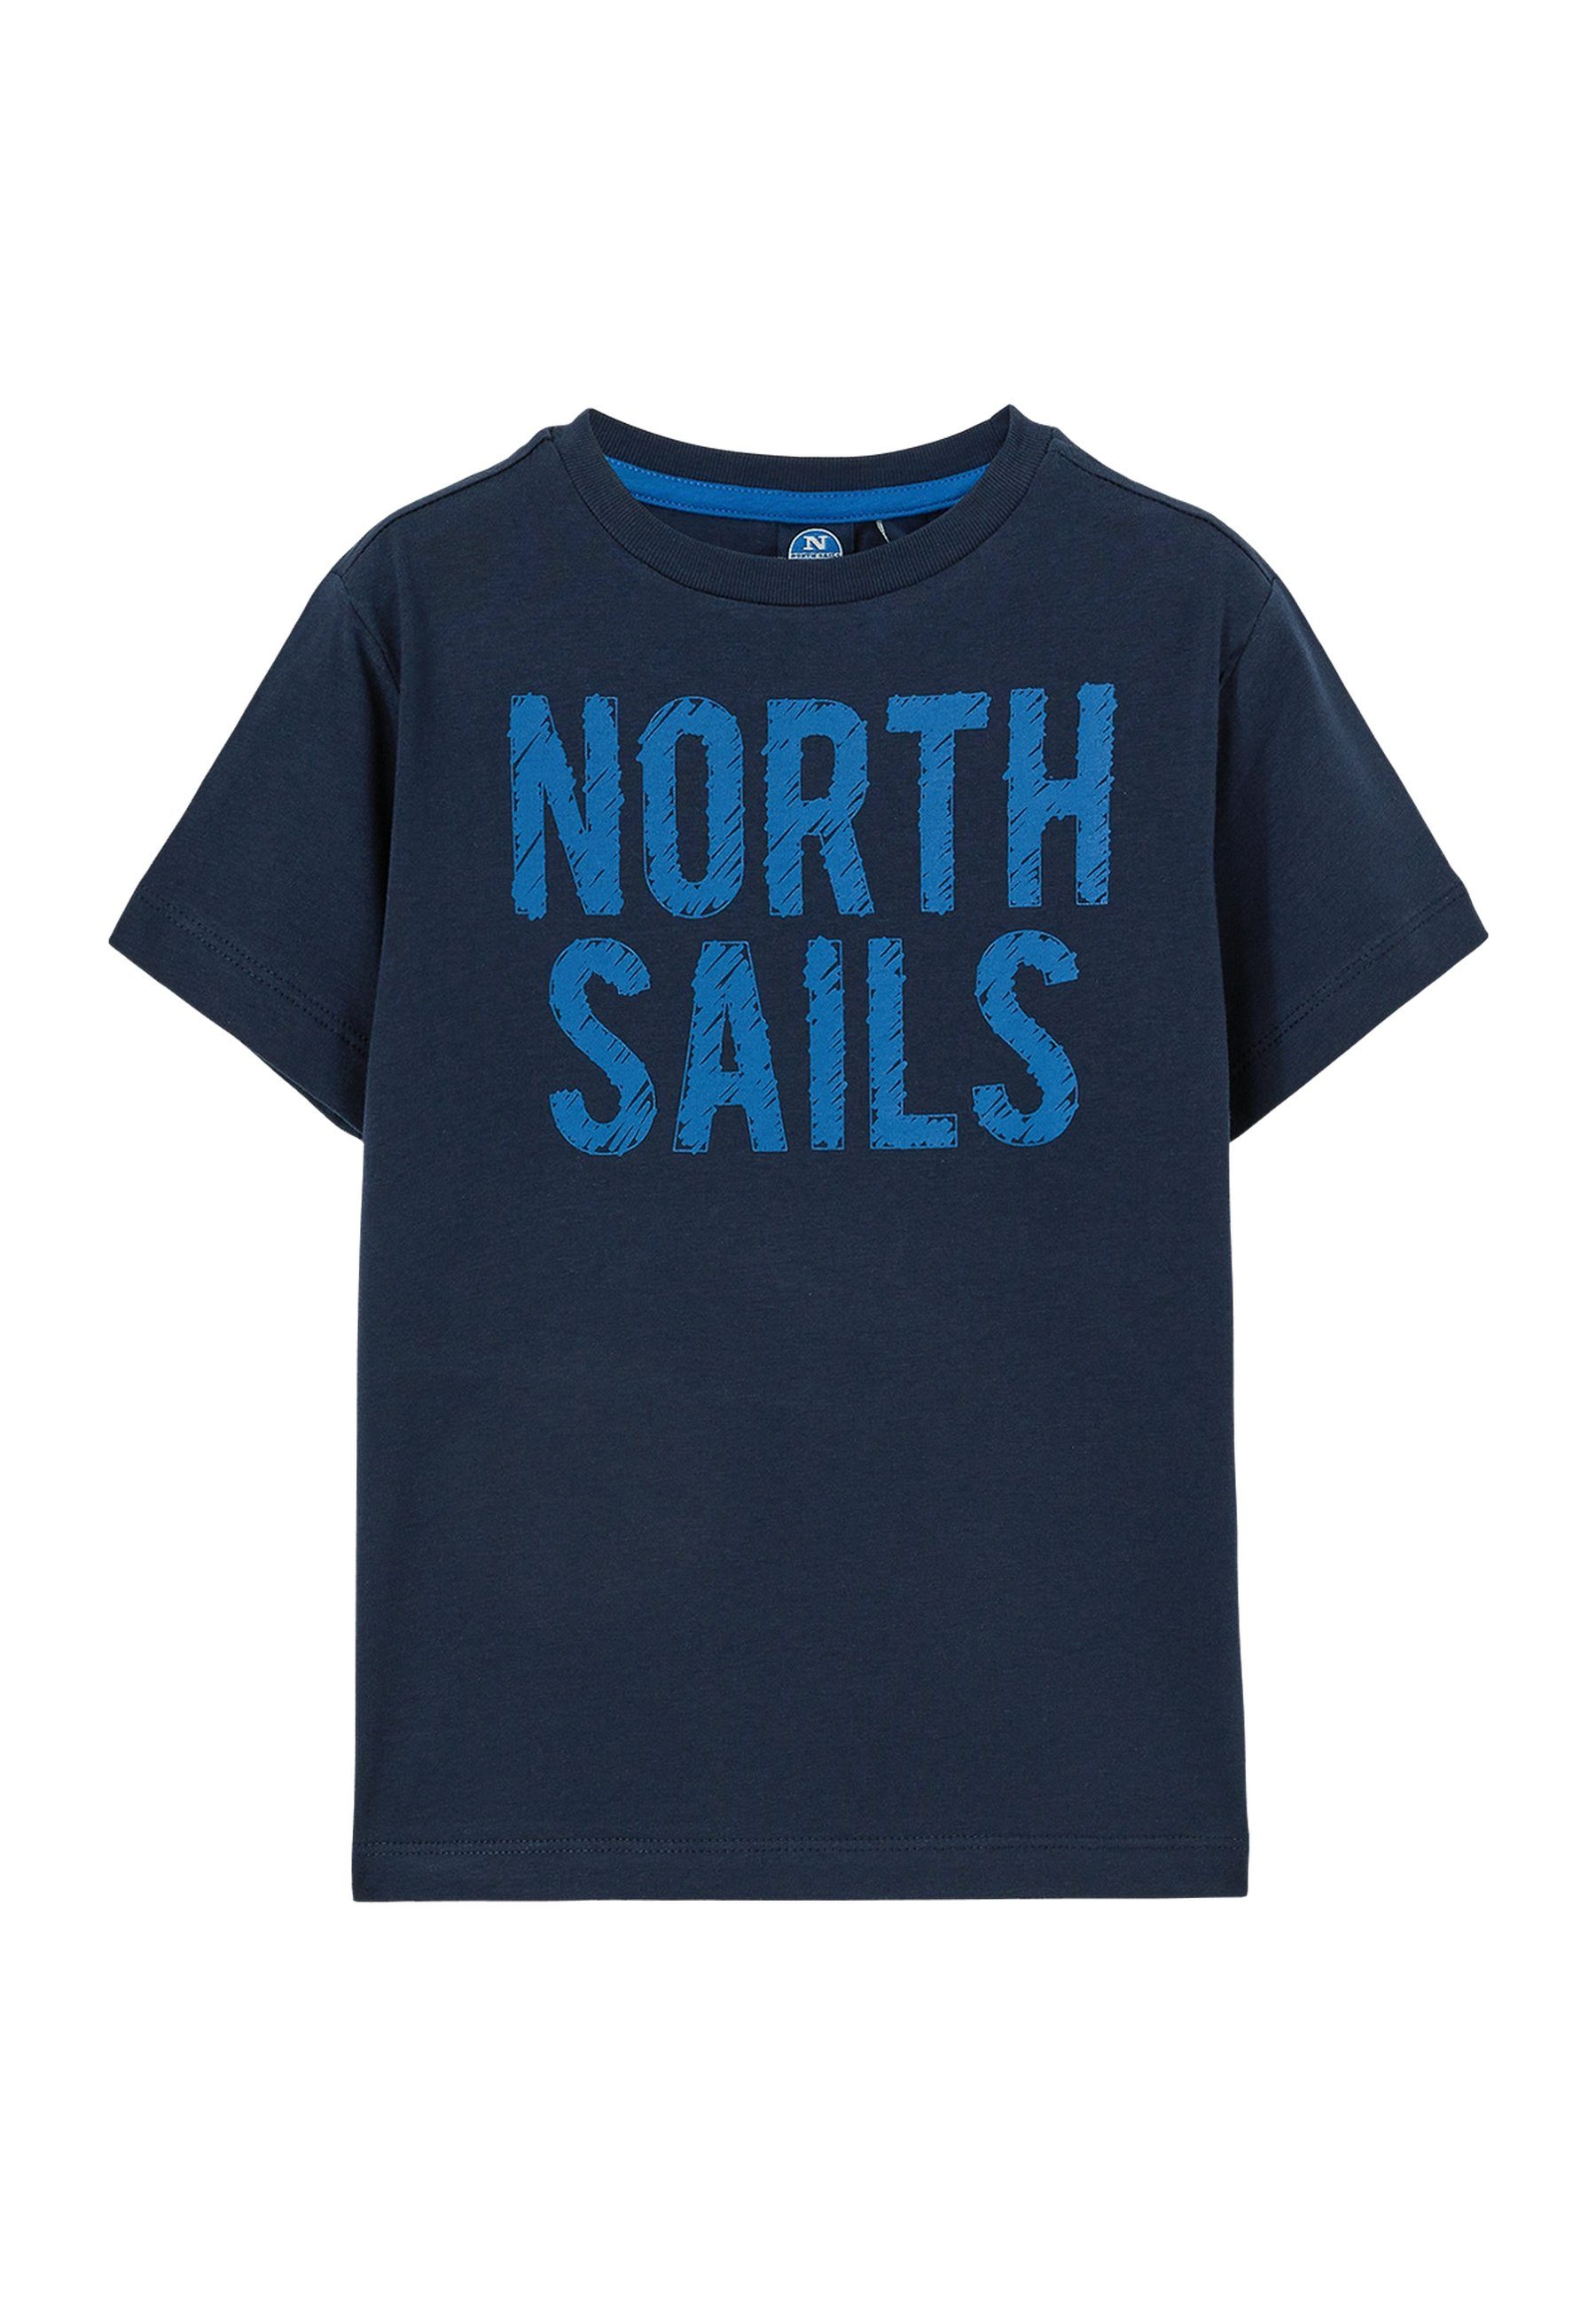 MARINEBLAU T-Shirt Sails Baumwoll-Jersey-T-Shirt North